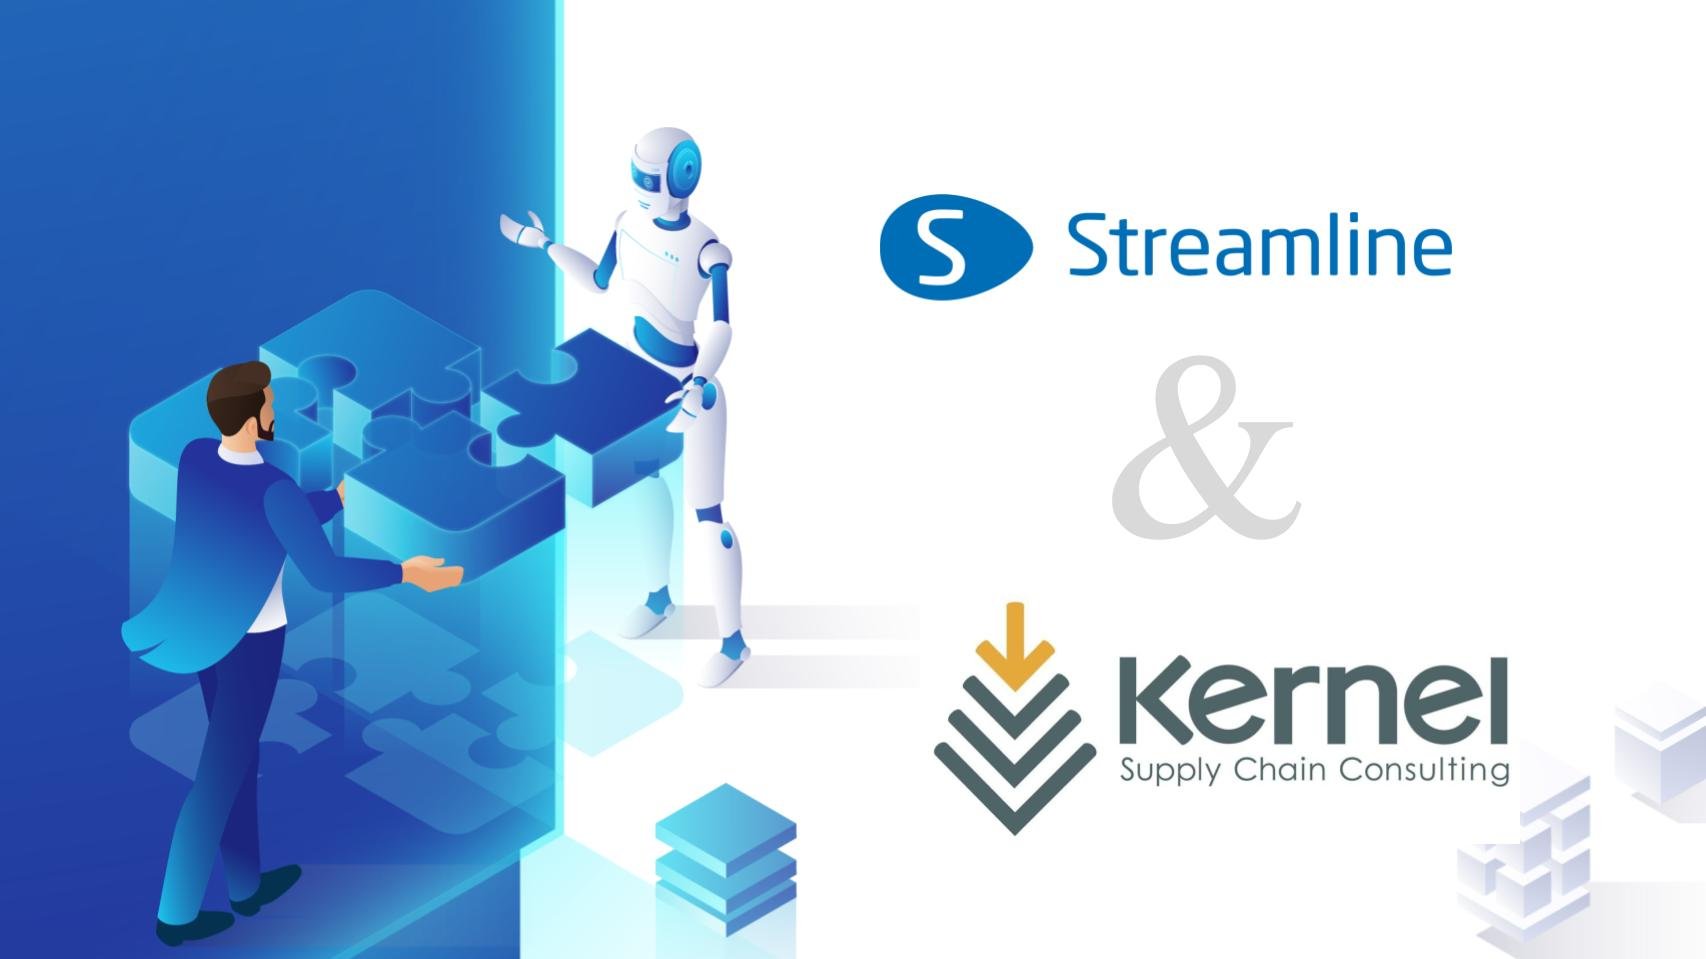 GMDH Streamline와 Kernel Supply Chain Consulting, 귀중한 파트너십 발표